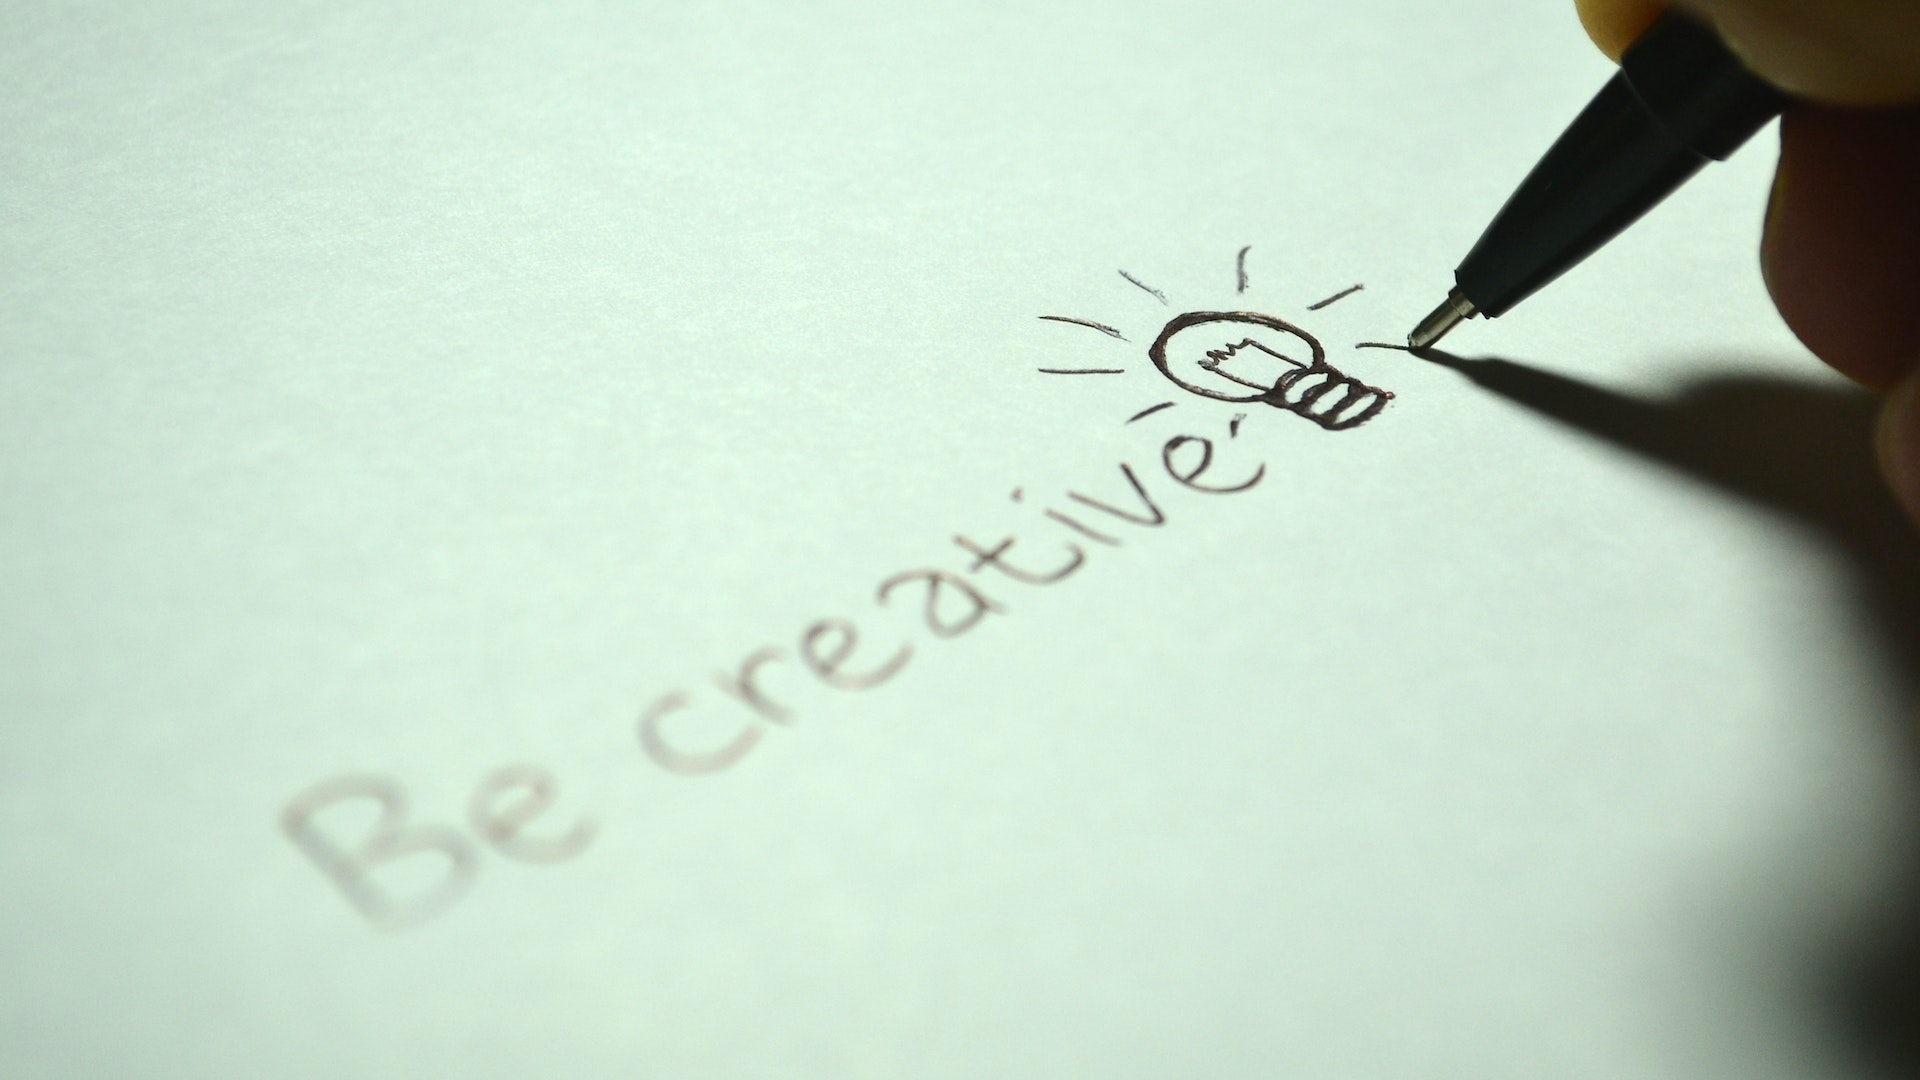 The Creative Spark: Rekindle Your Innovation Flame